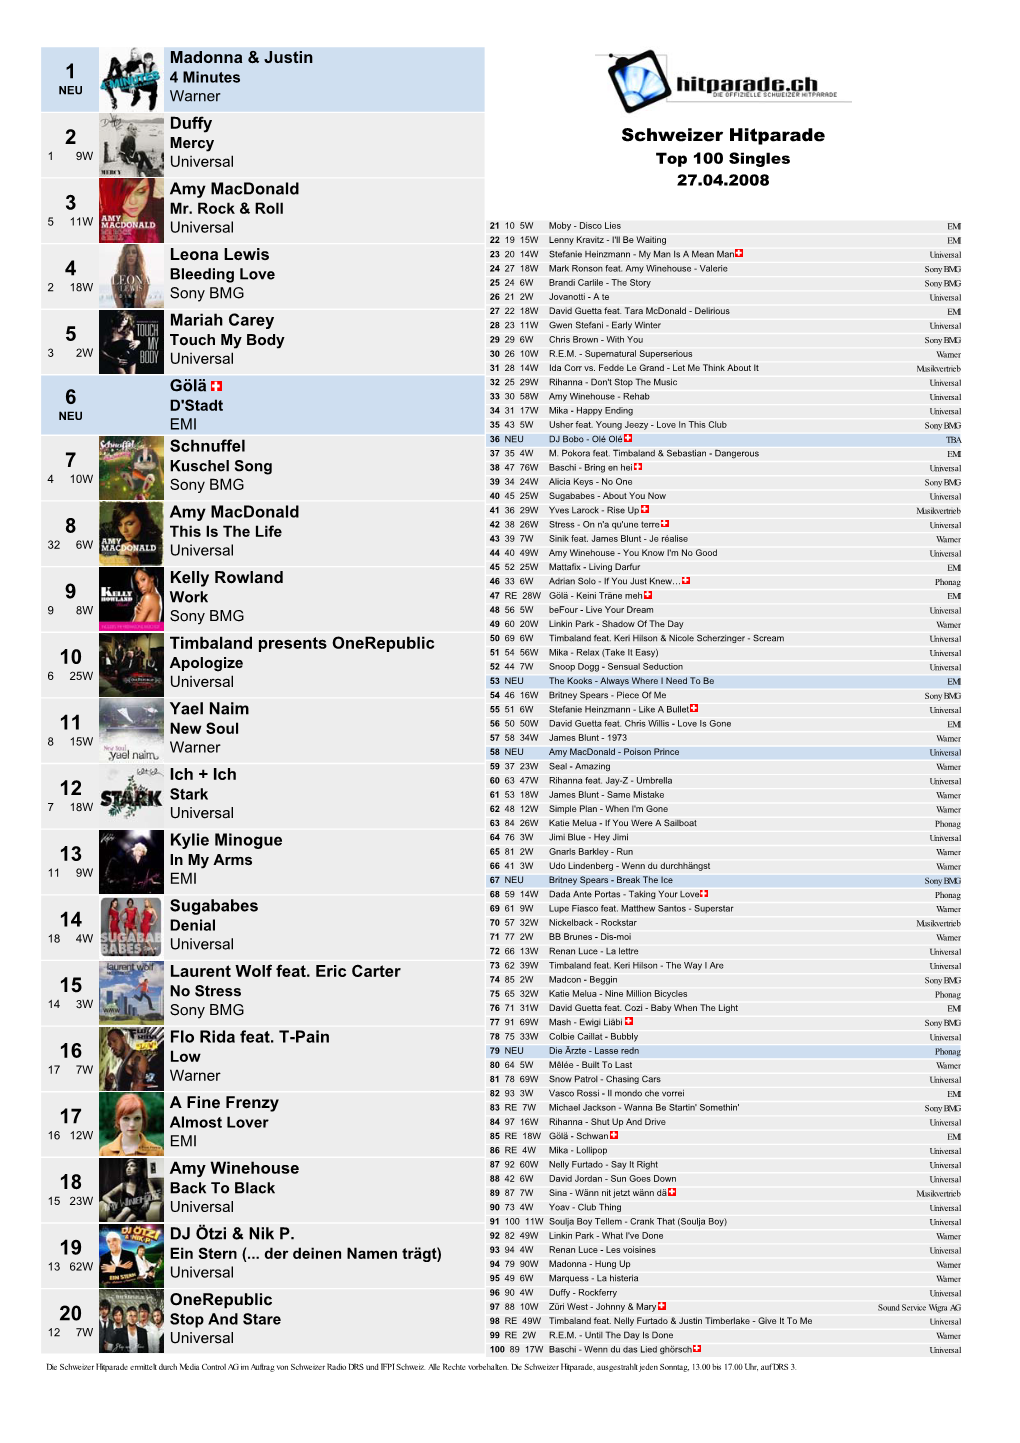 Schweizer Hitparade 19W Universal Top 100 Singles Amy Macdonald 27.04.2008 3 Mr